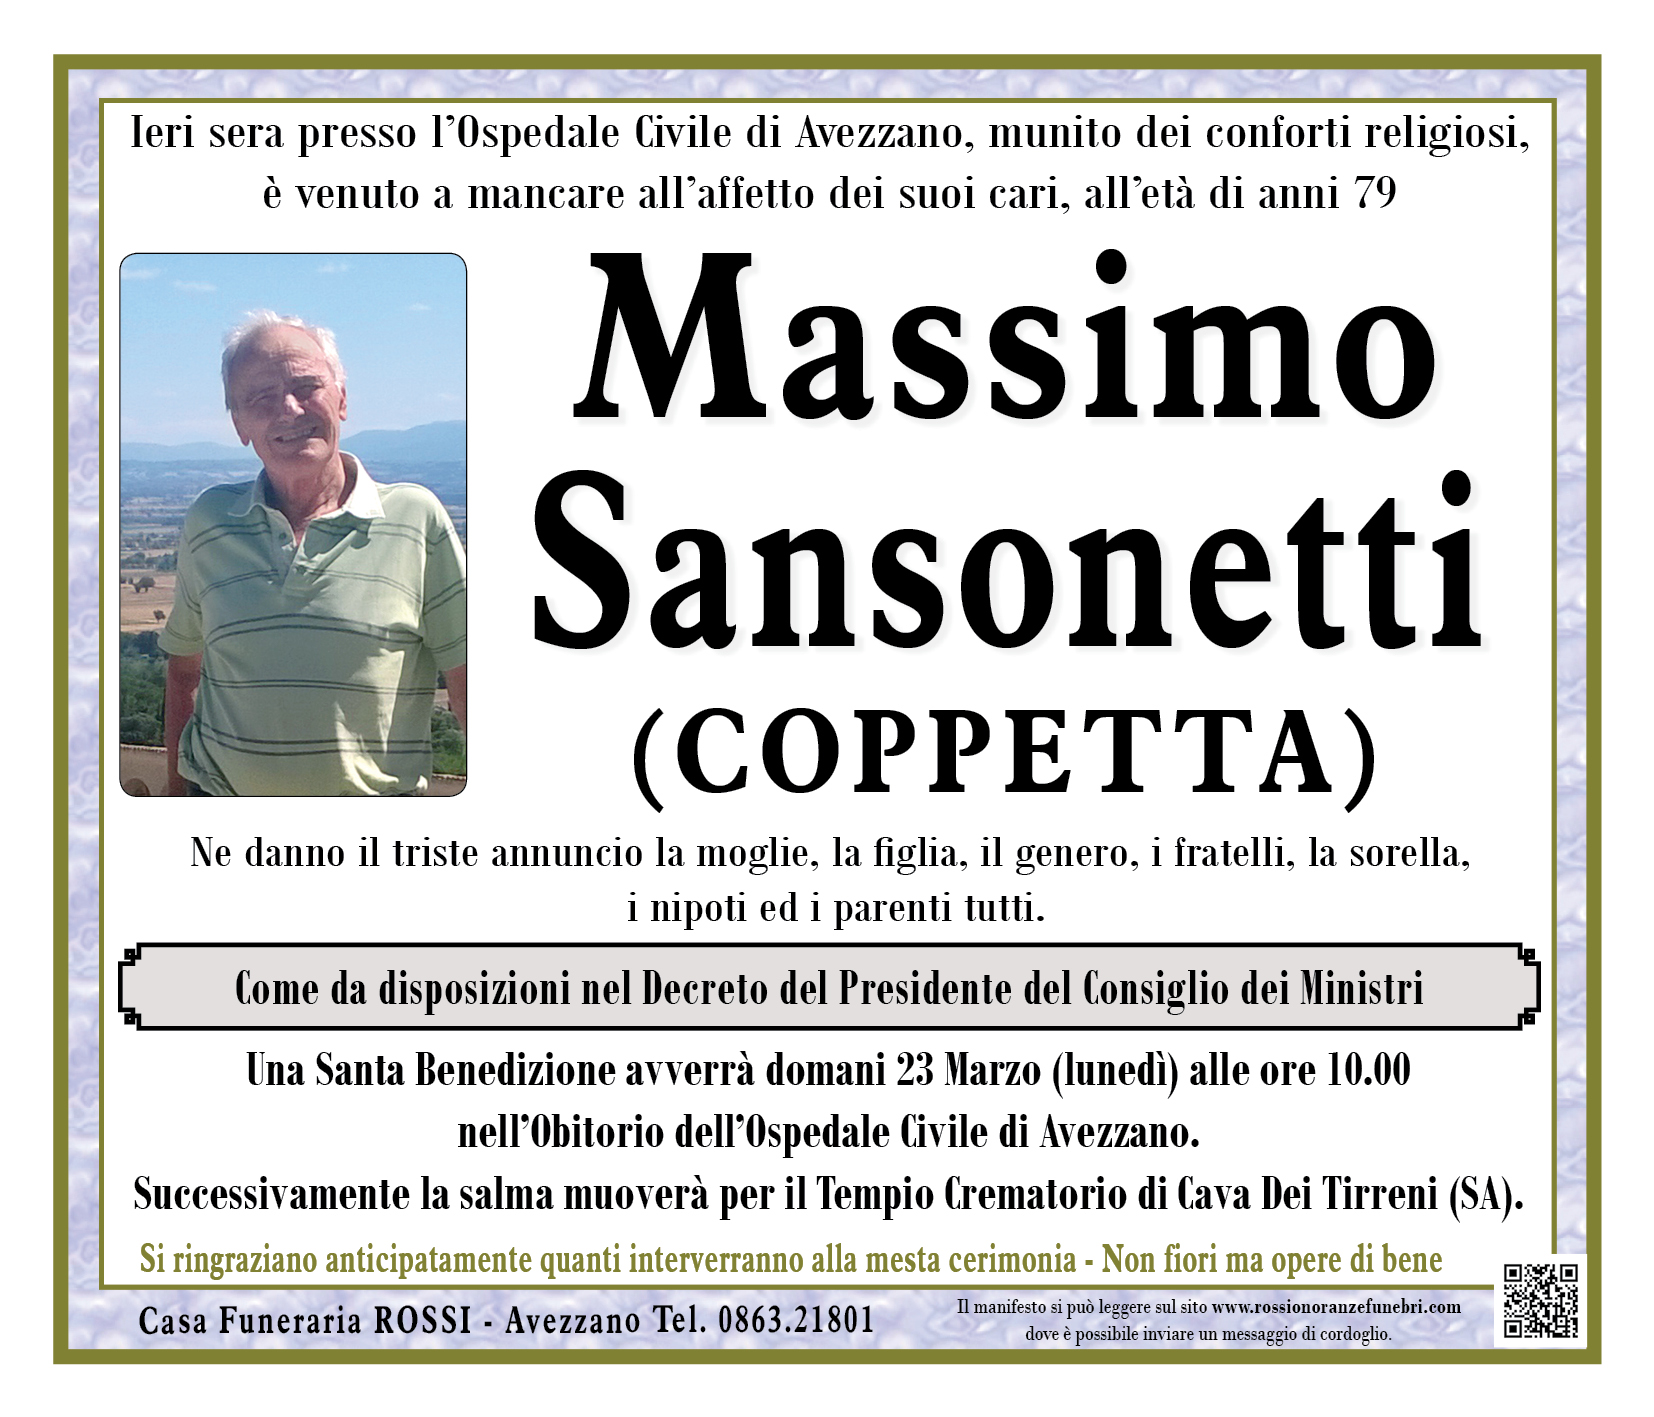 Massimo Sansonetti